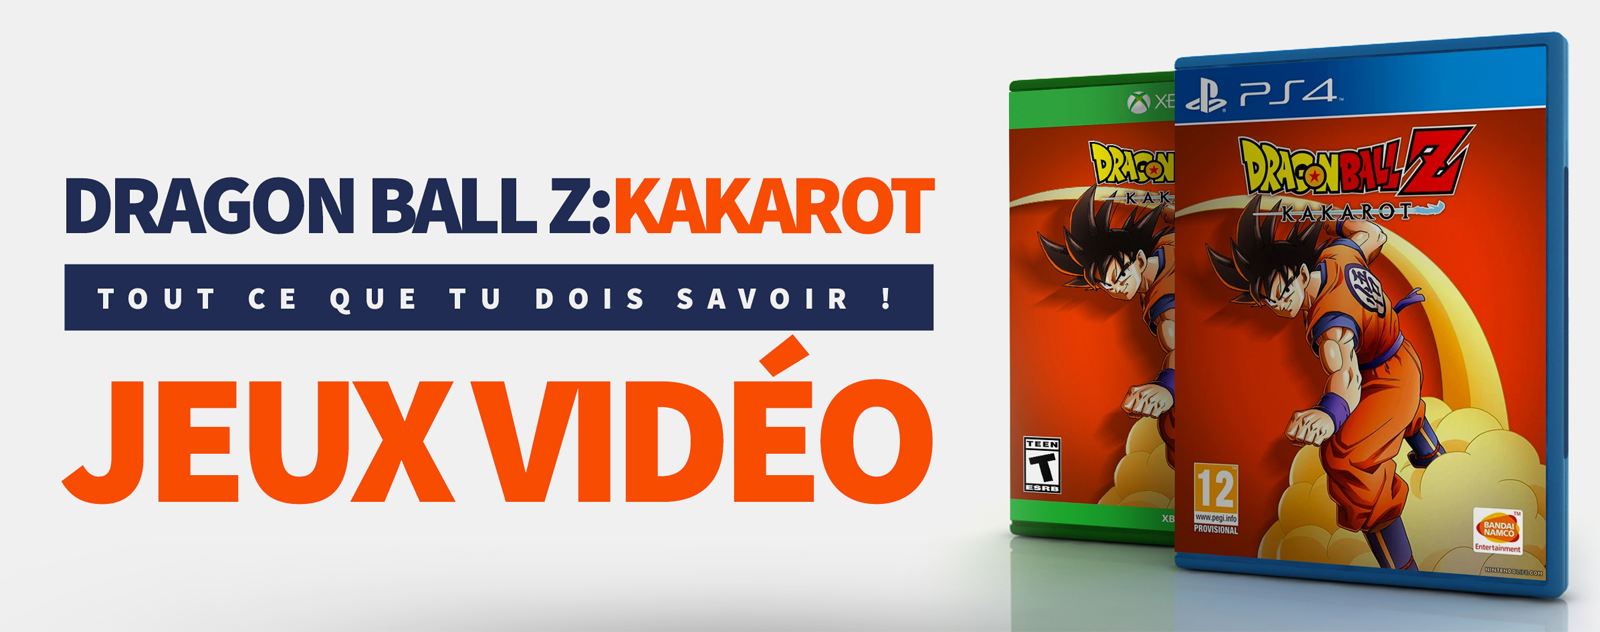 Dragon Ball Z Kakarot (Nintendo Switch) : : Jeux vidéo